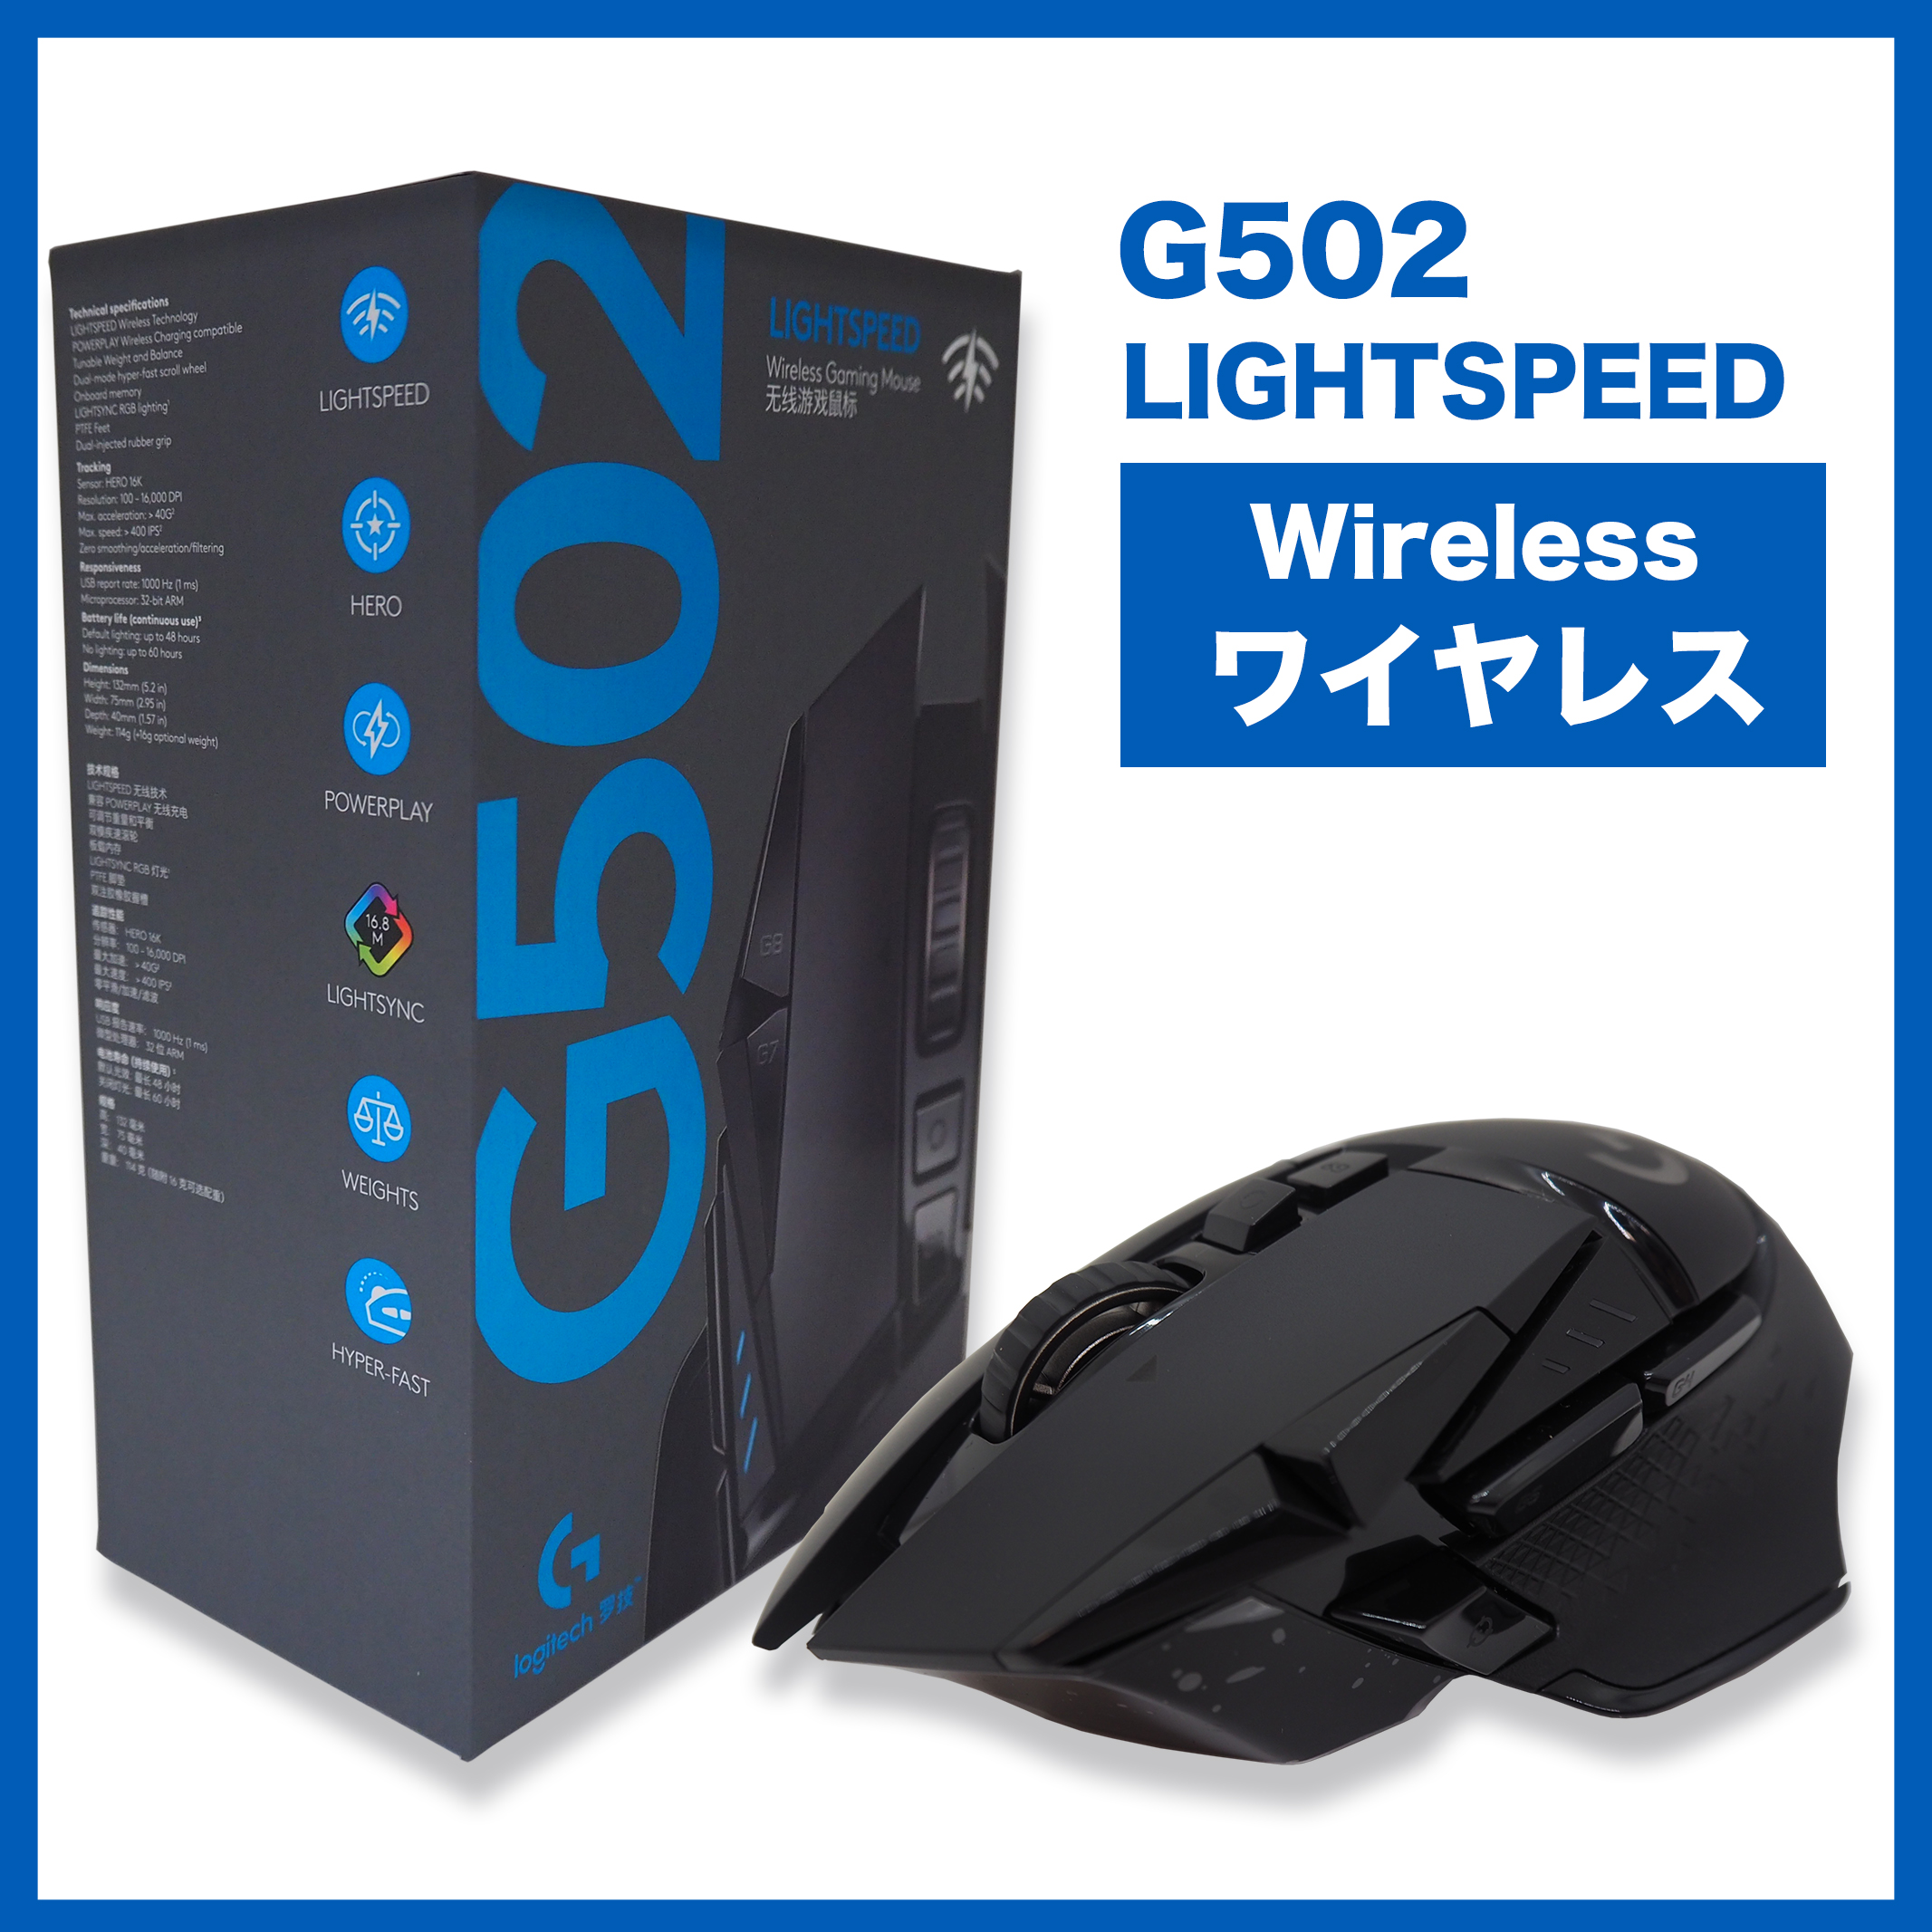 Мышь g502 беспроводная. Logitech 502. Logitech g502. Логитеч 502 беспроводная. G502 Lightspeed Wireless.